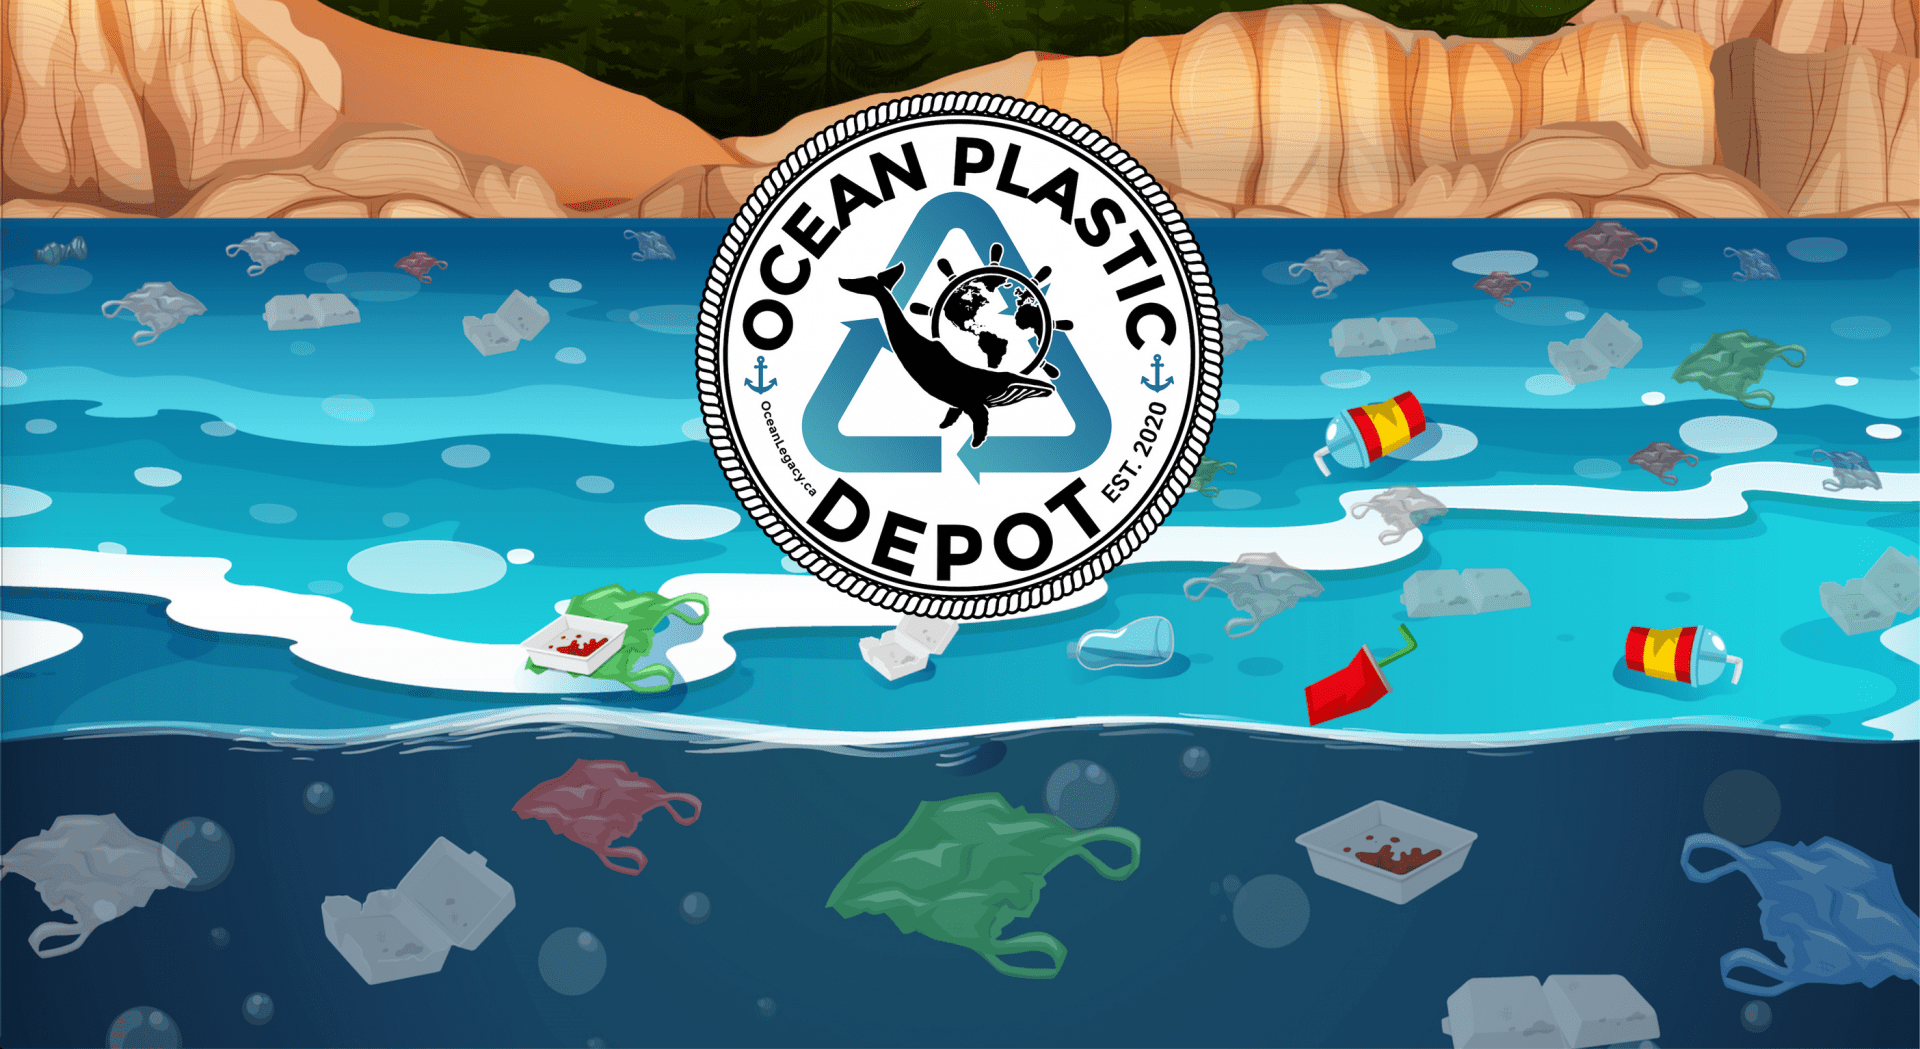 OLF & Friends Open Canada's First Ocean Plastic Depot in Powel River, BC